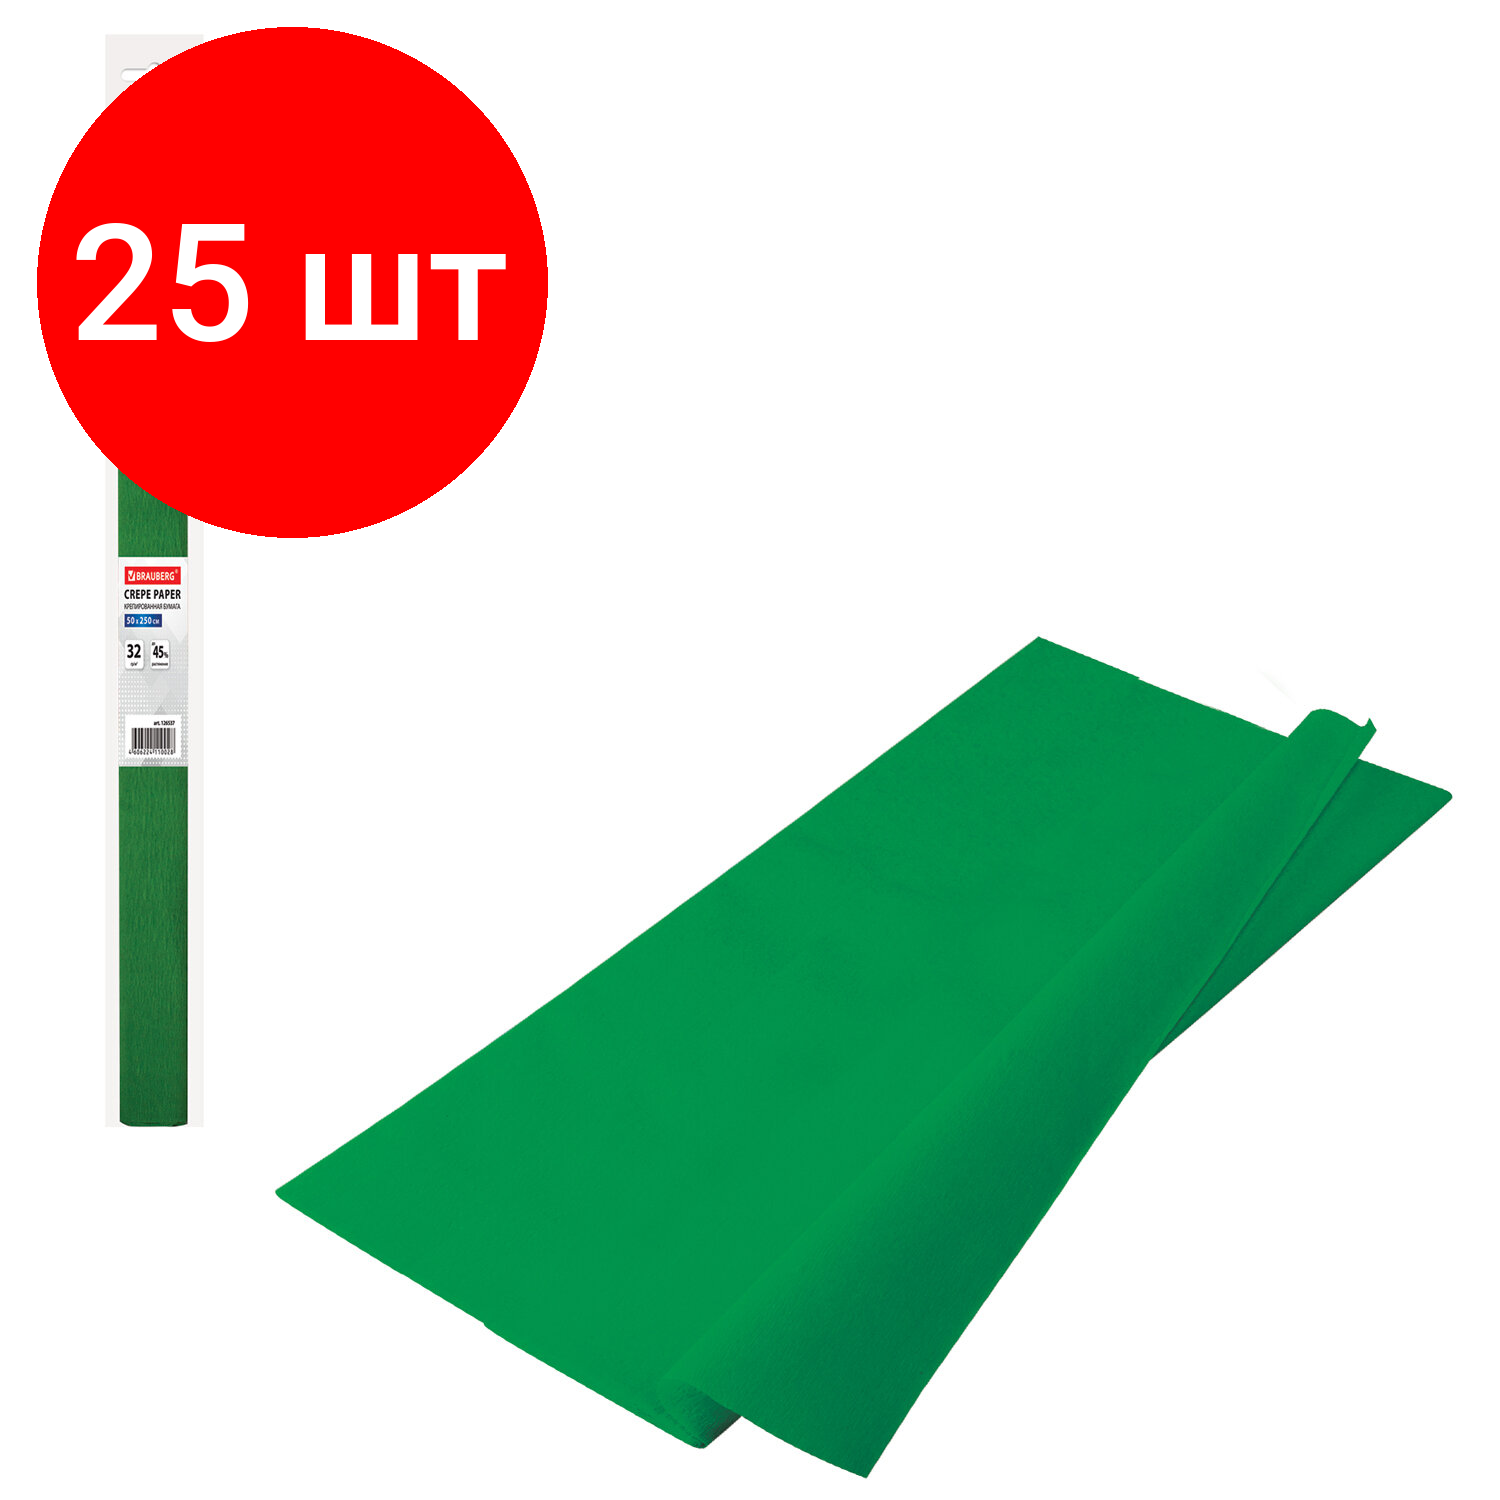 Комплект 25 шт, Бумага гофрированная (креповая) плотная, 32 г/м2, темно-зеленая, 50х250 см, в рулоне, BRAUBERG, 126537